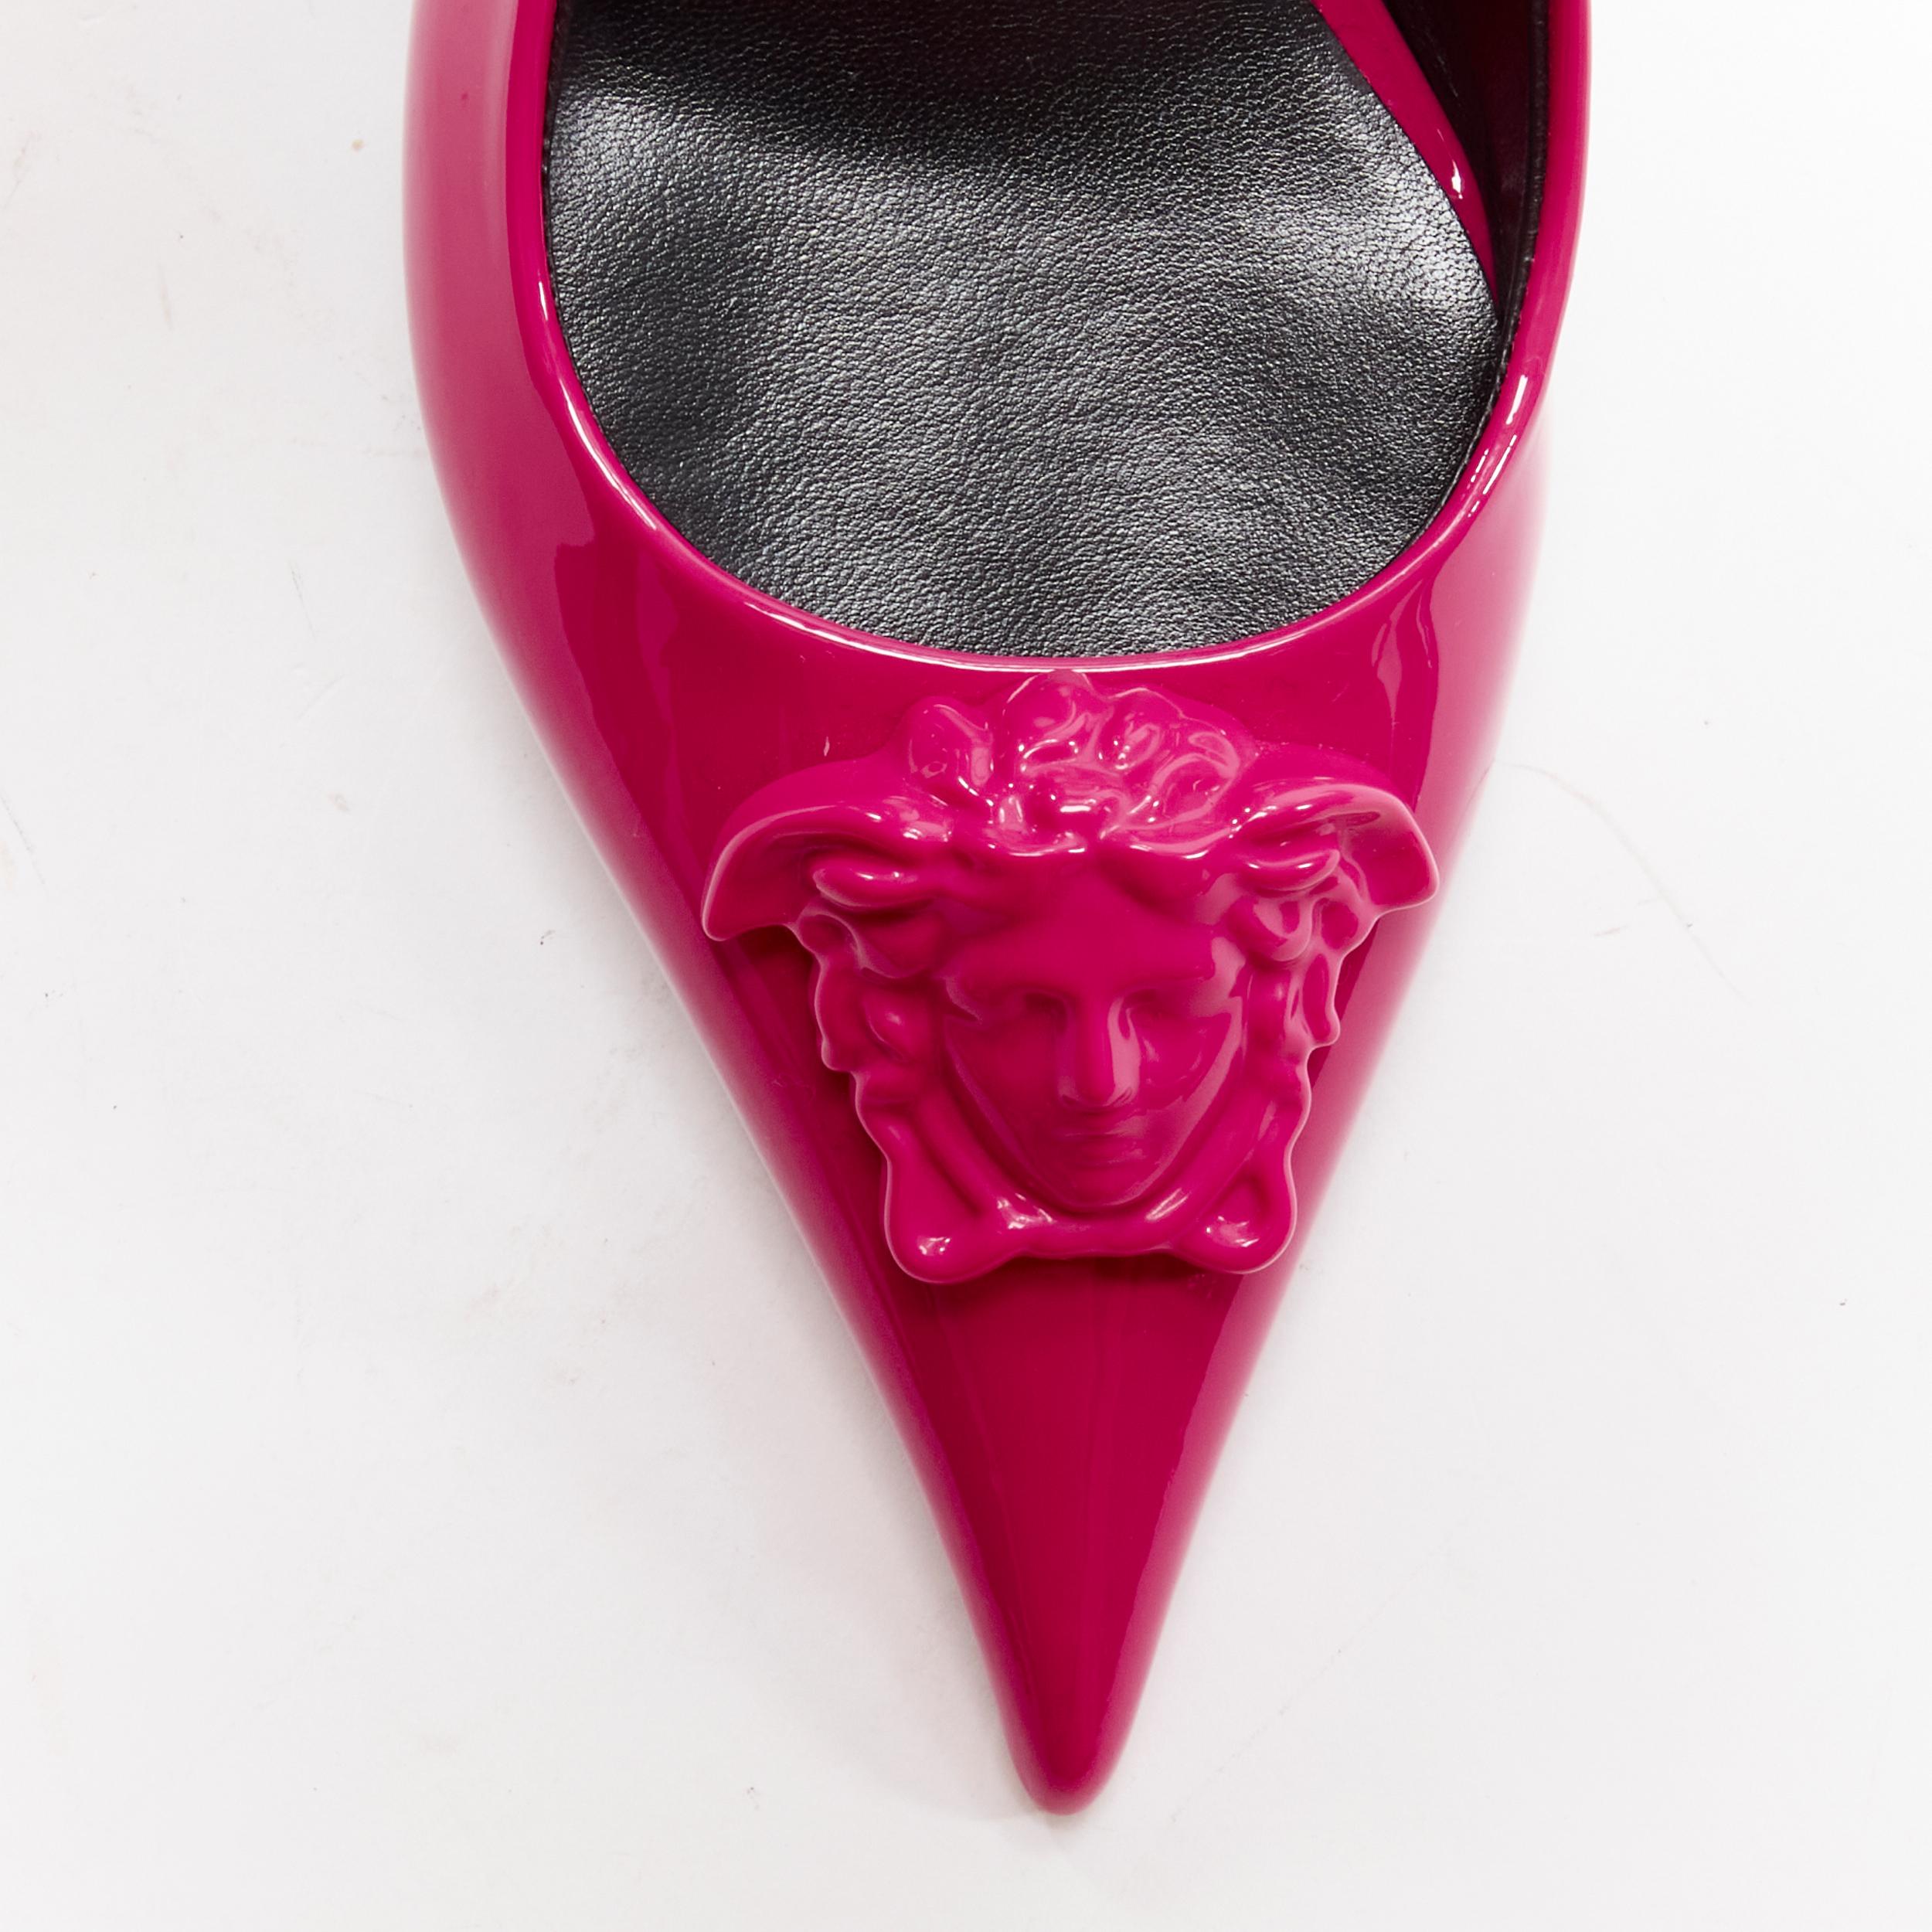 new VERSACE Palazzo Medusa fuscia pink sling kitteh heel pointed toe pump EU36 For Sale 2